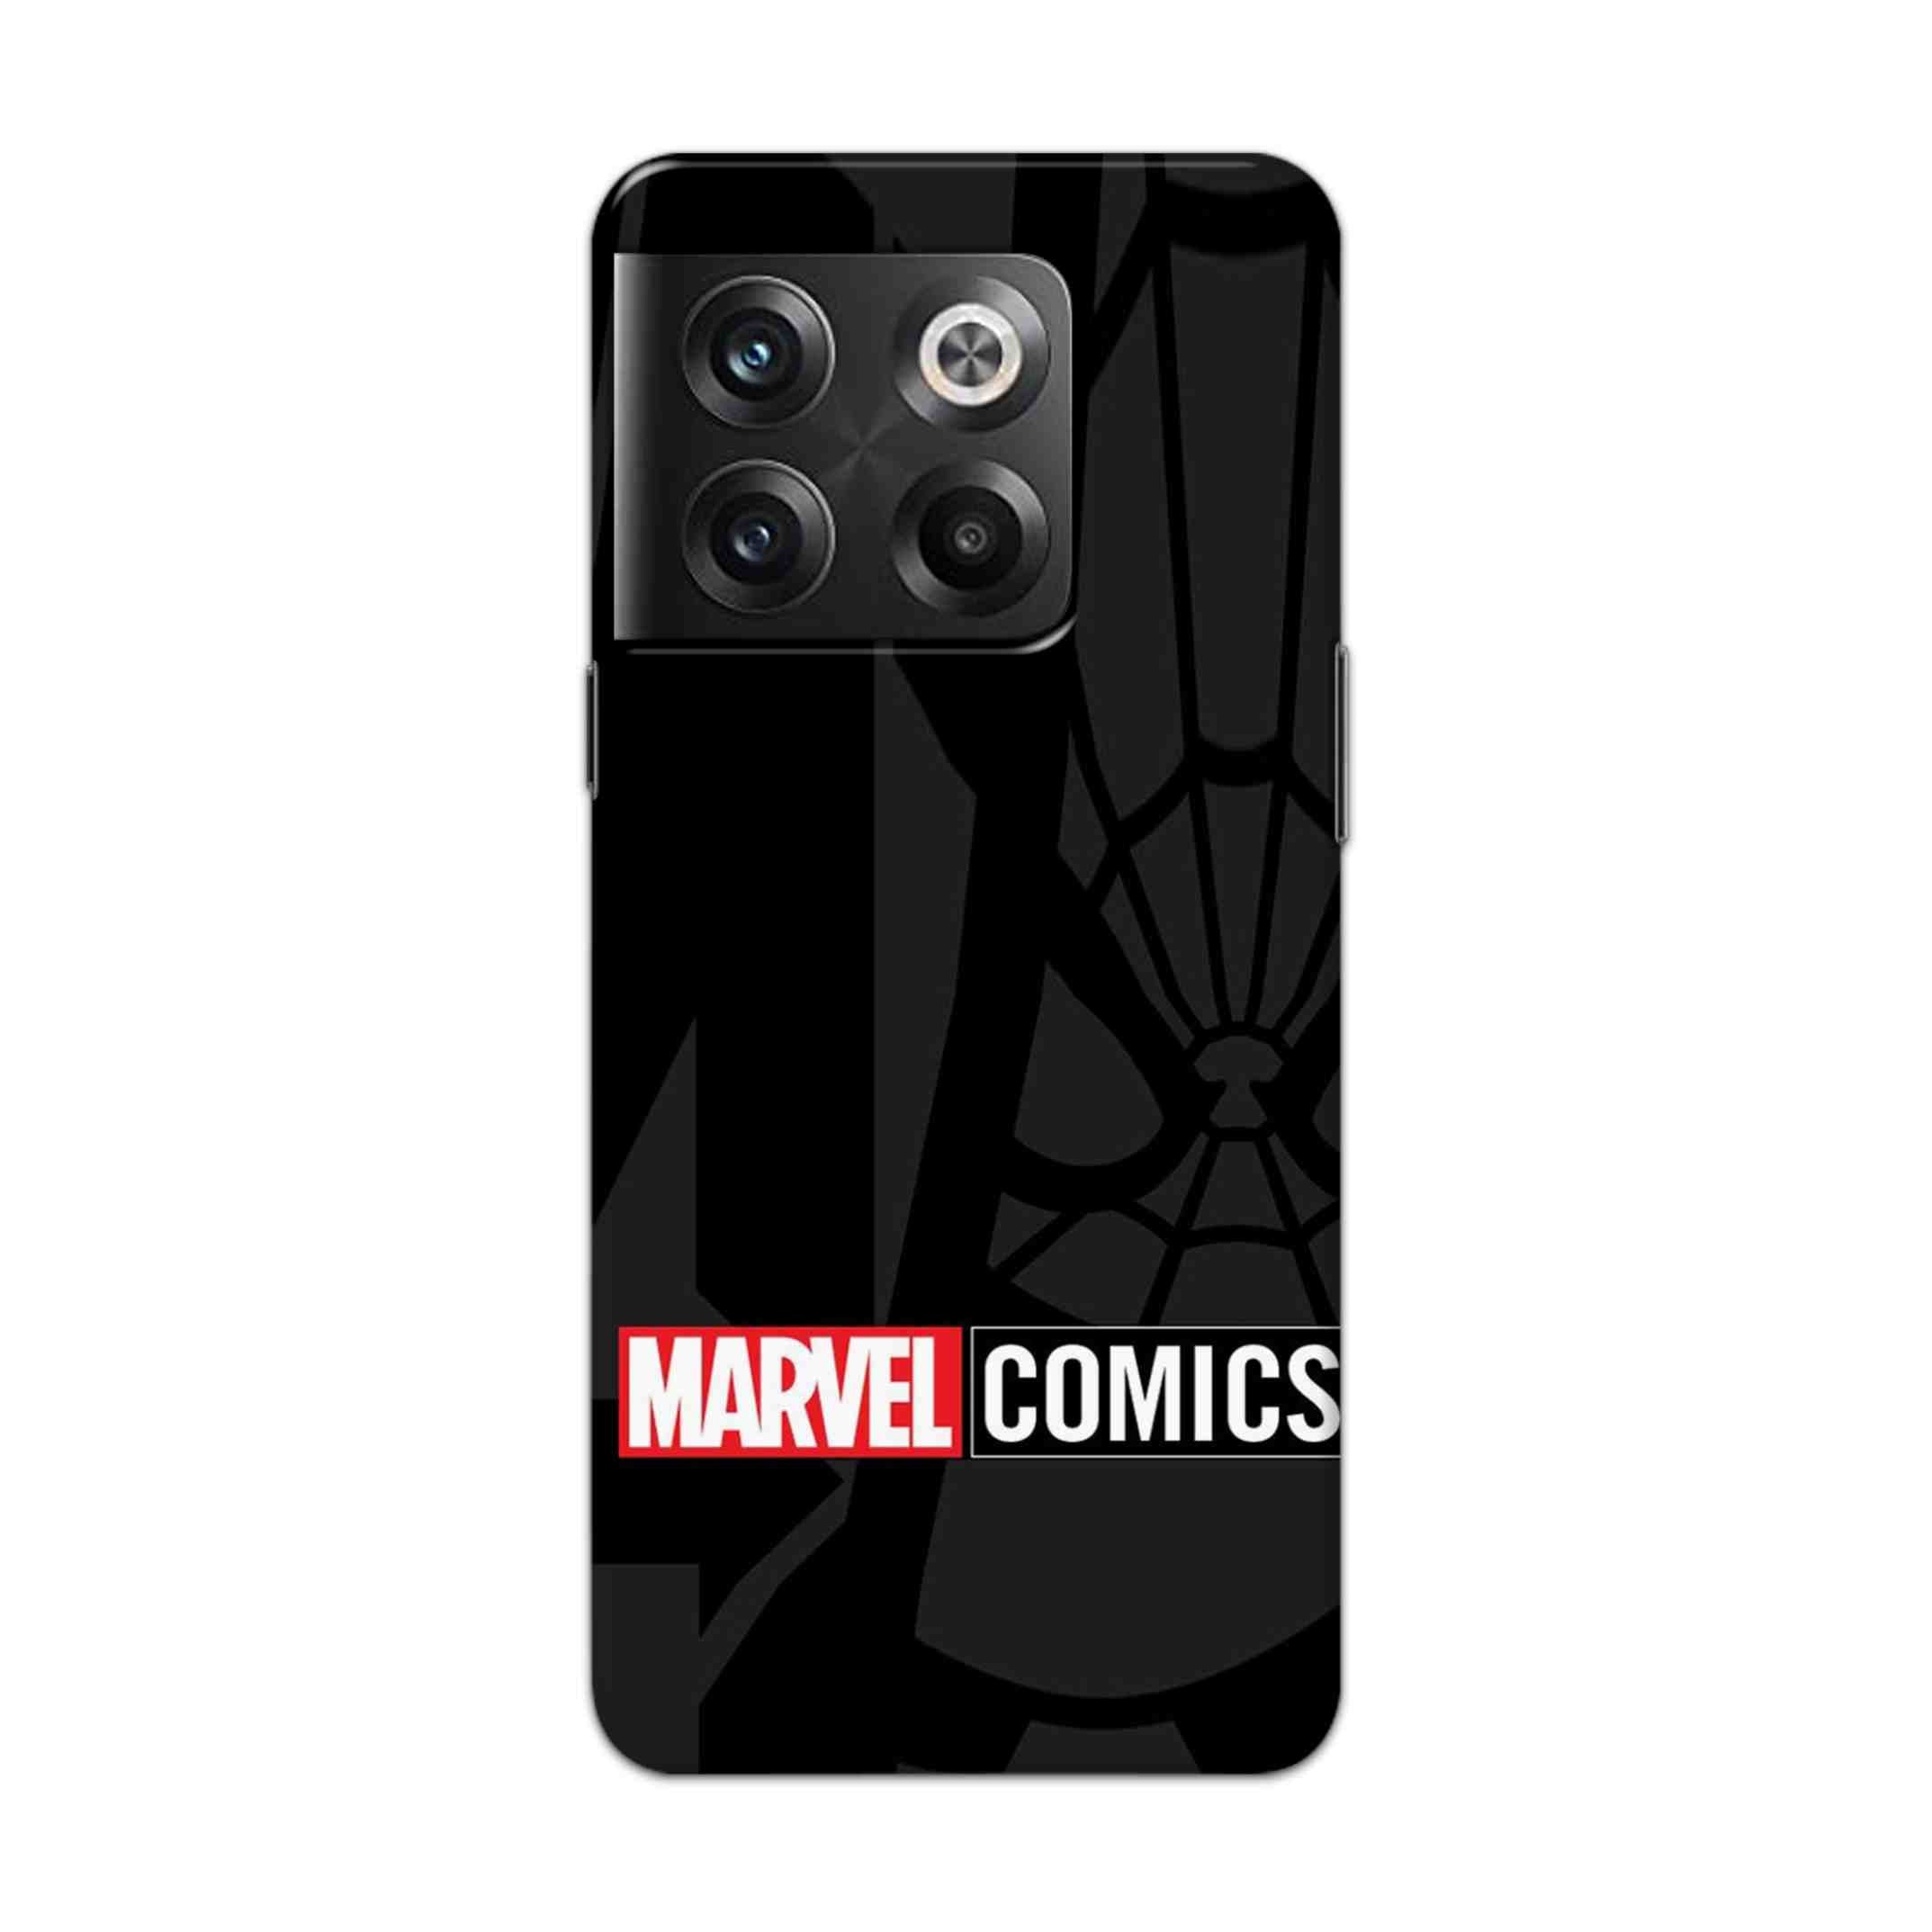 Buy Marvel Comics Hard Back Mobile Phone Case Cover For Oneplus 10T Online